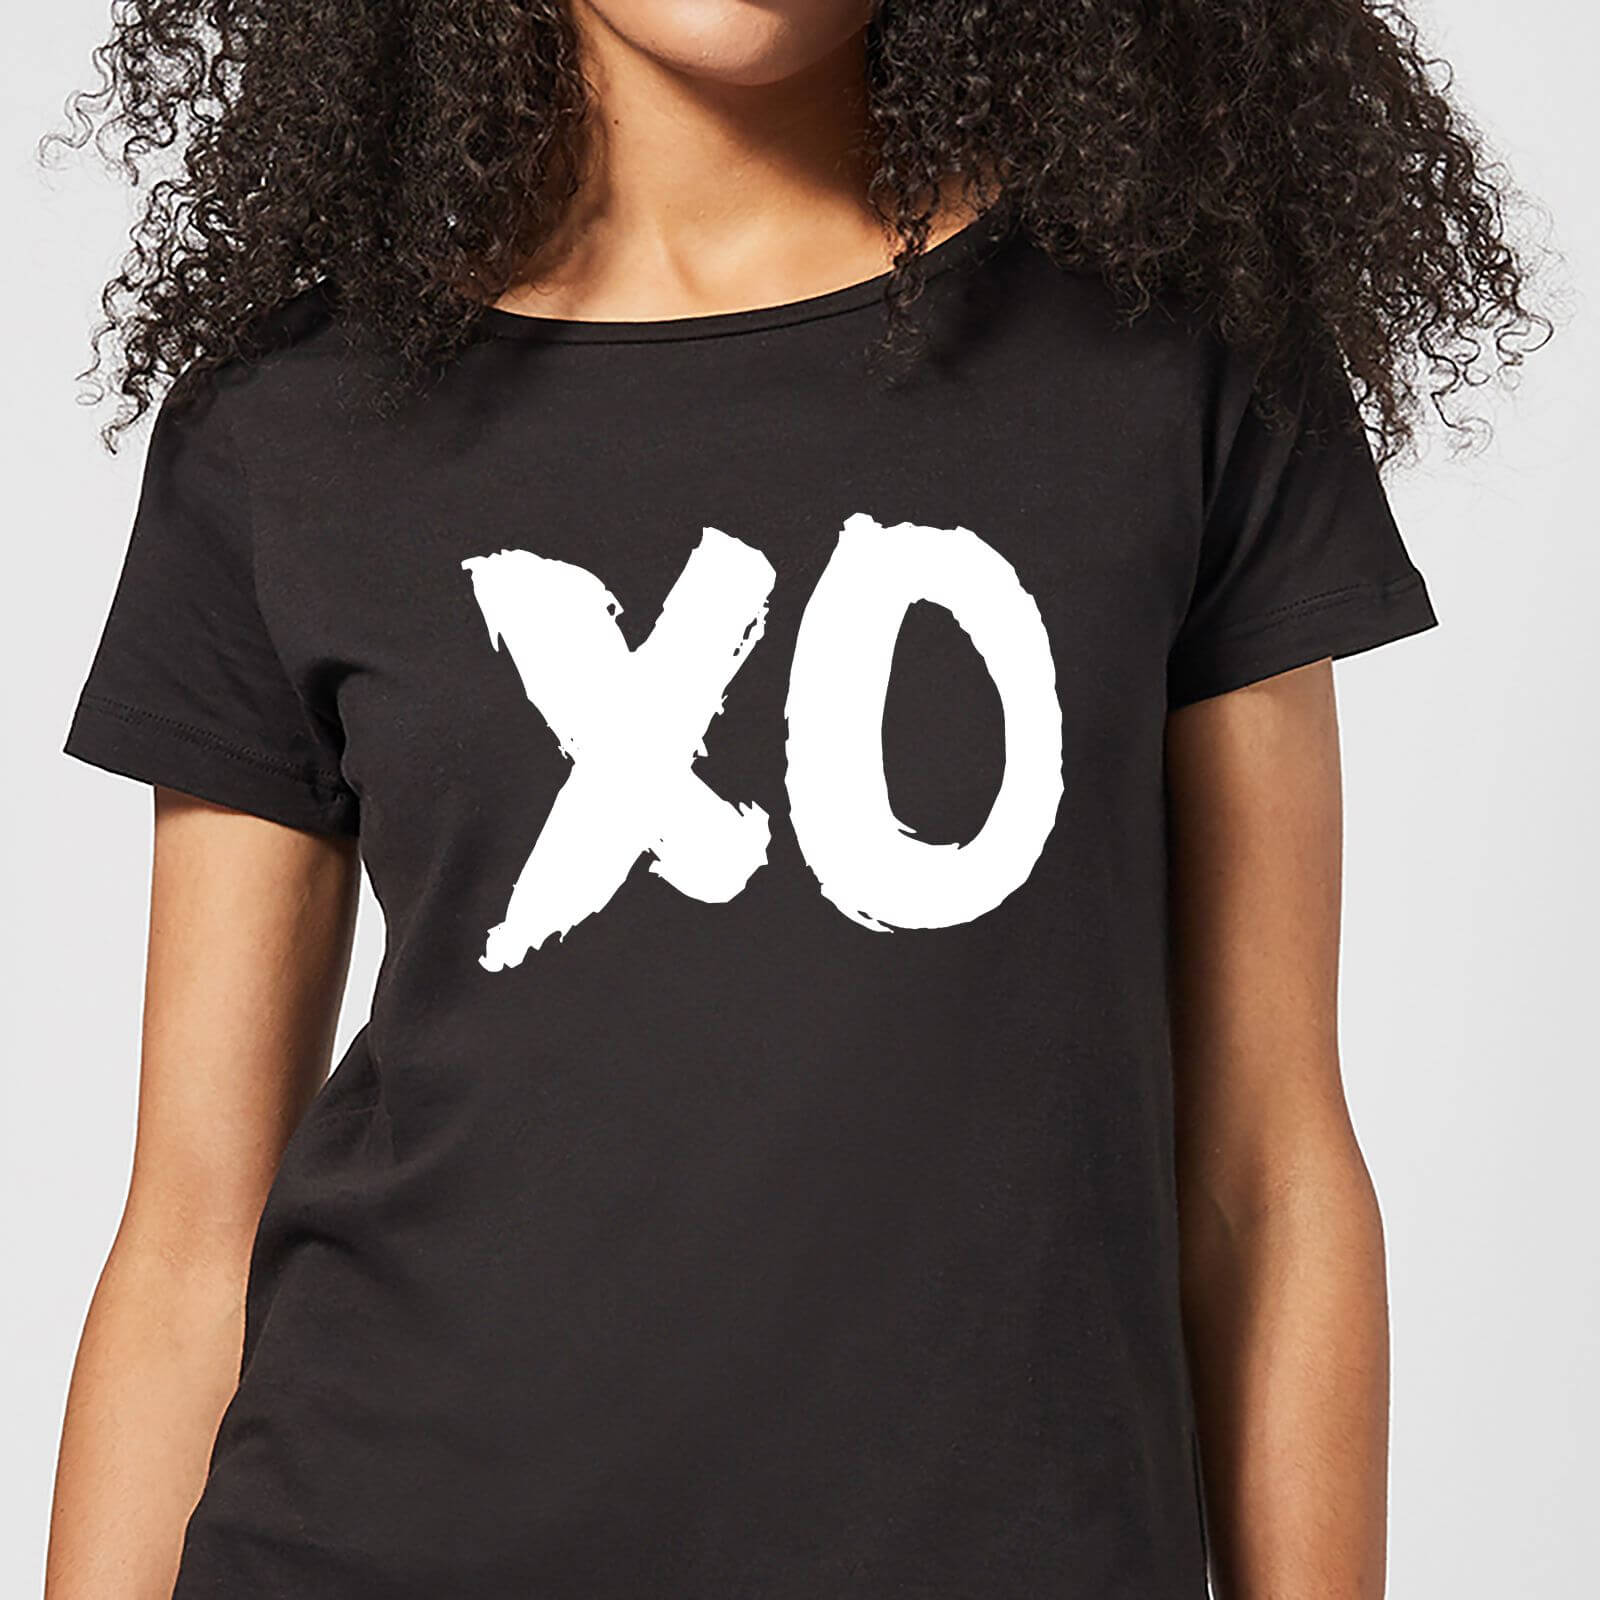 The Motivated Type XO Women's T-Shirt - Black - S - Black